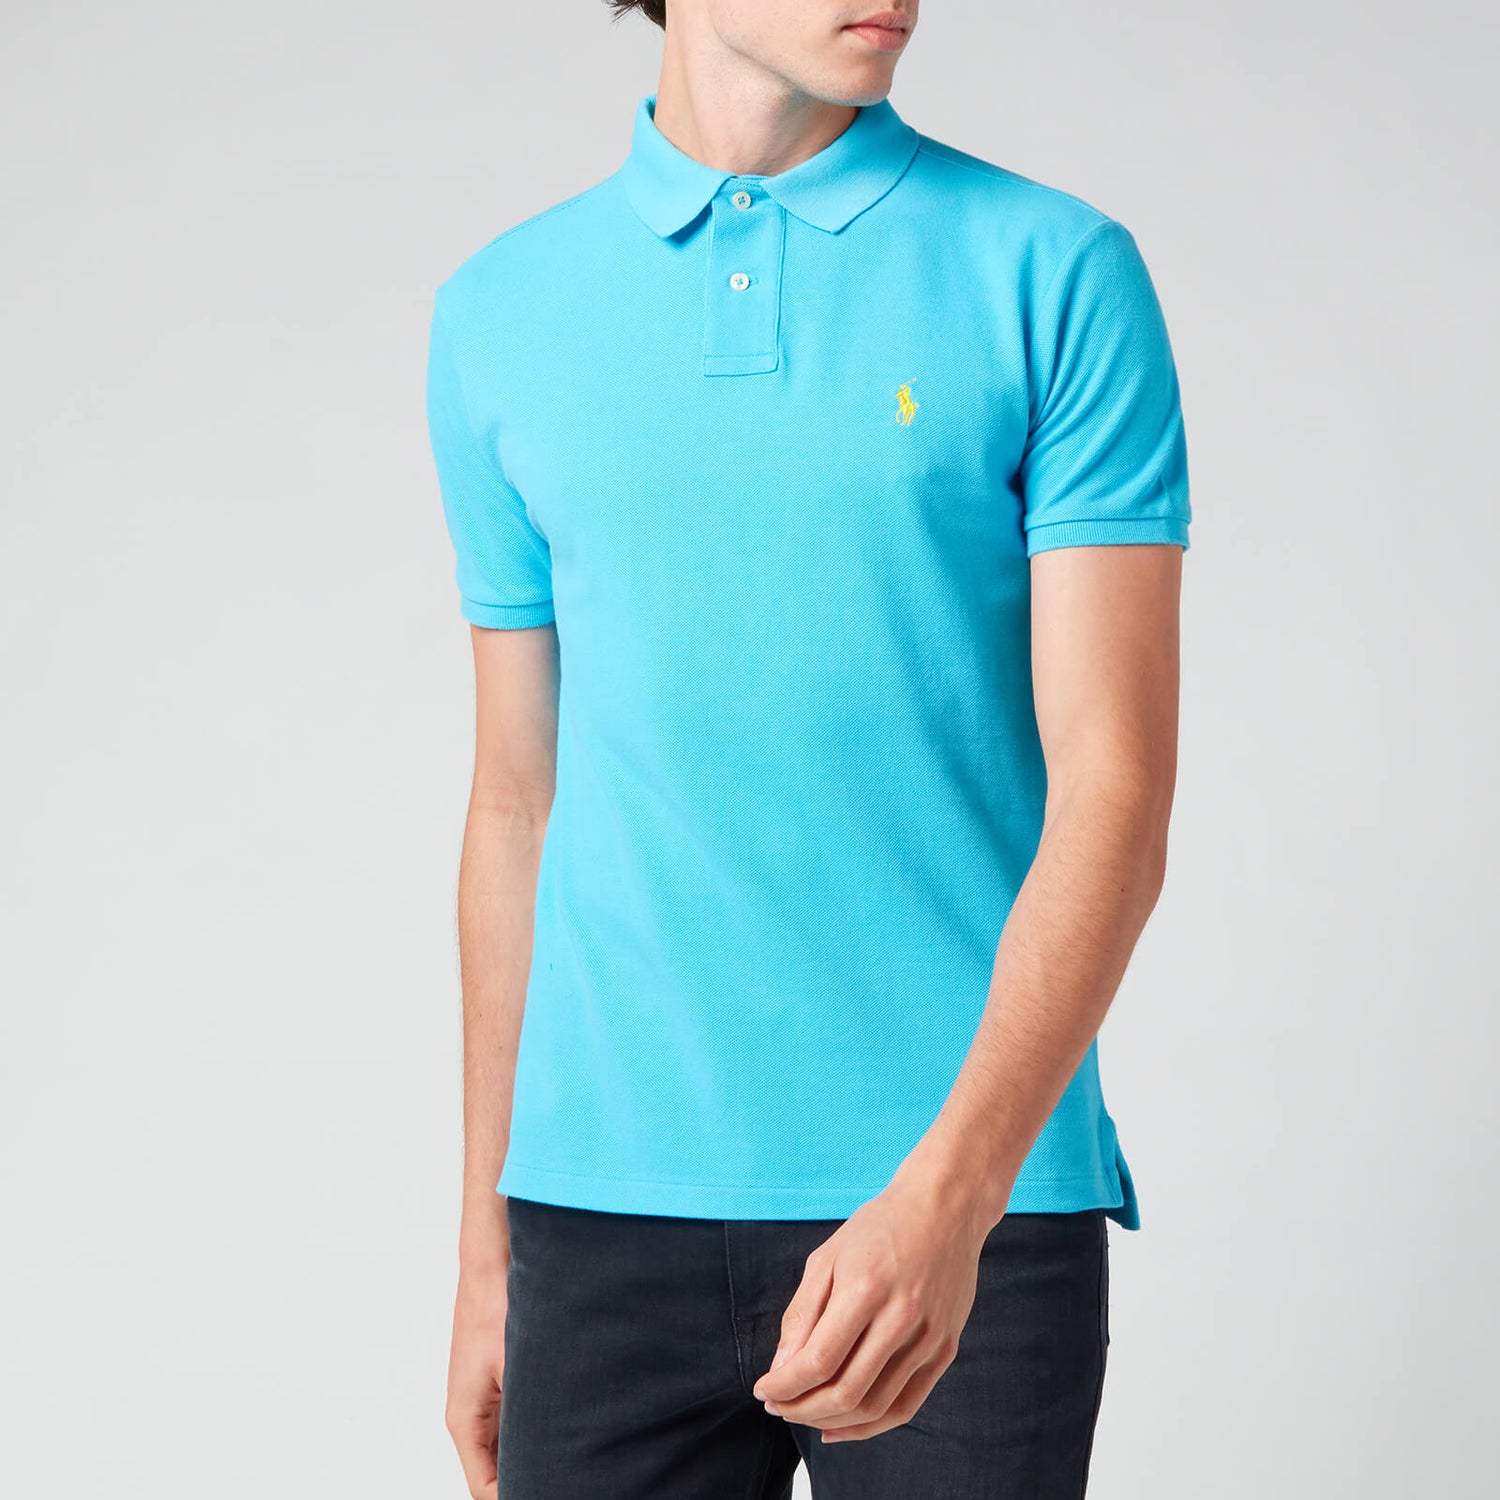 Polo Ralph Lauren Men's Slim Fit Mesh Polo Shirt - Lindsay Blue